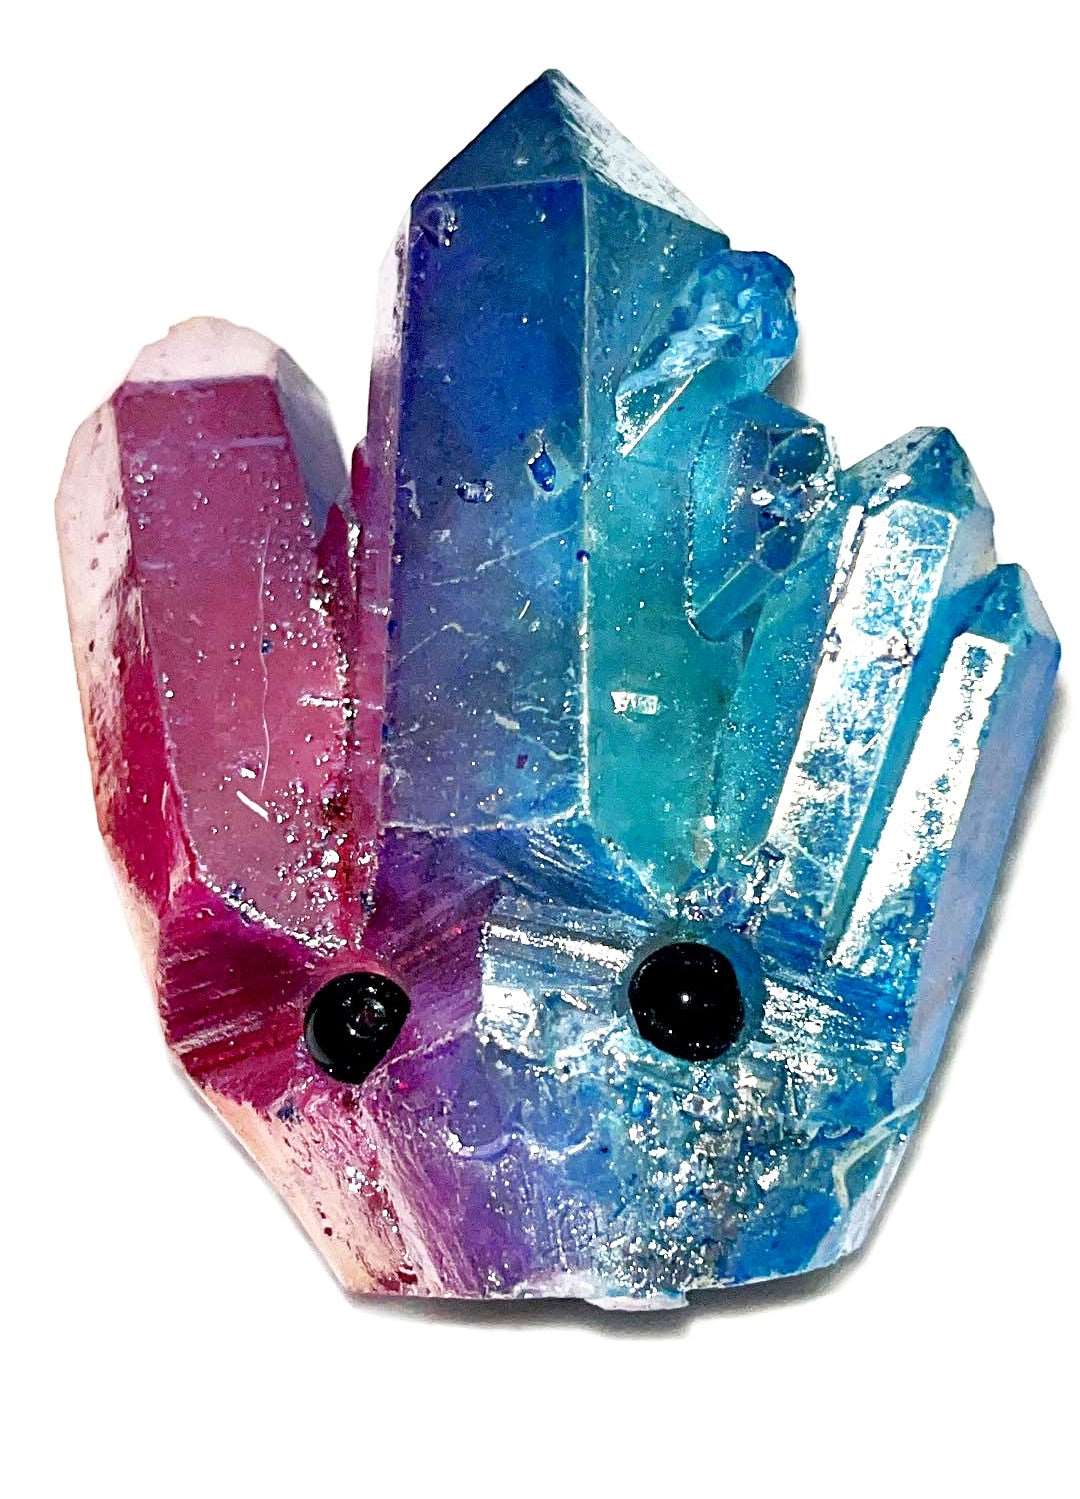 Aura quartz crystal Rock buddy, rock buddies, Crystal hedgehog, quartz cluster, cluster buddy, pet rock. Very strong energy, hand tingles